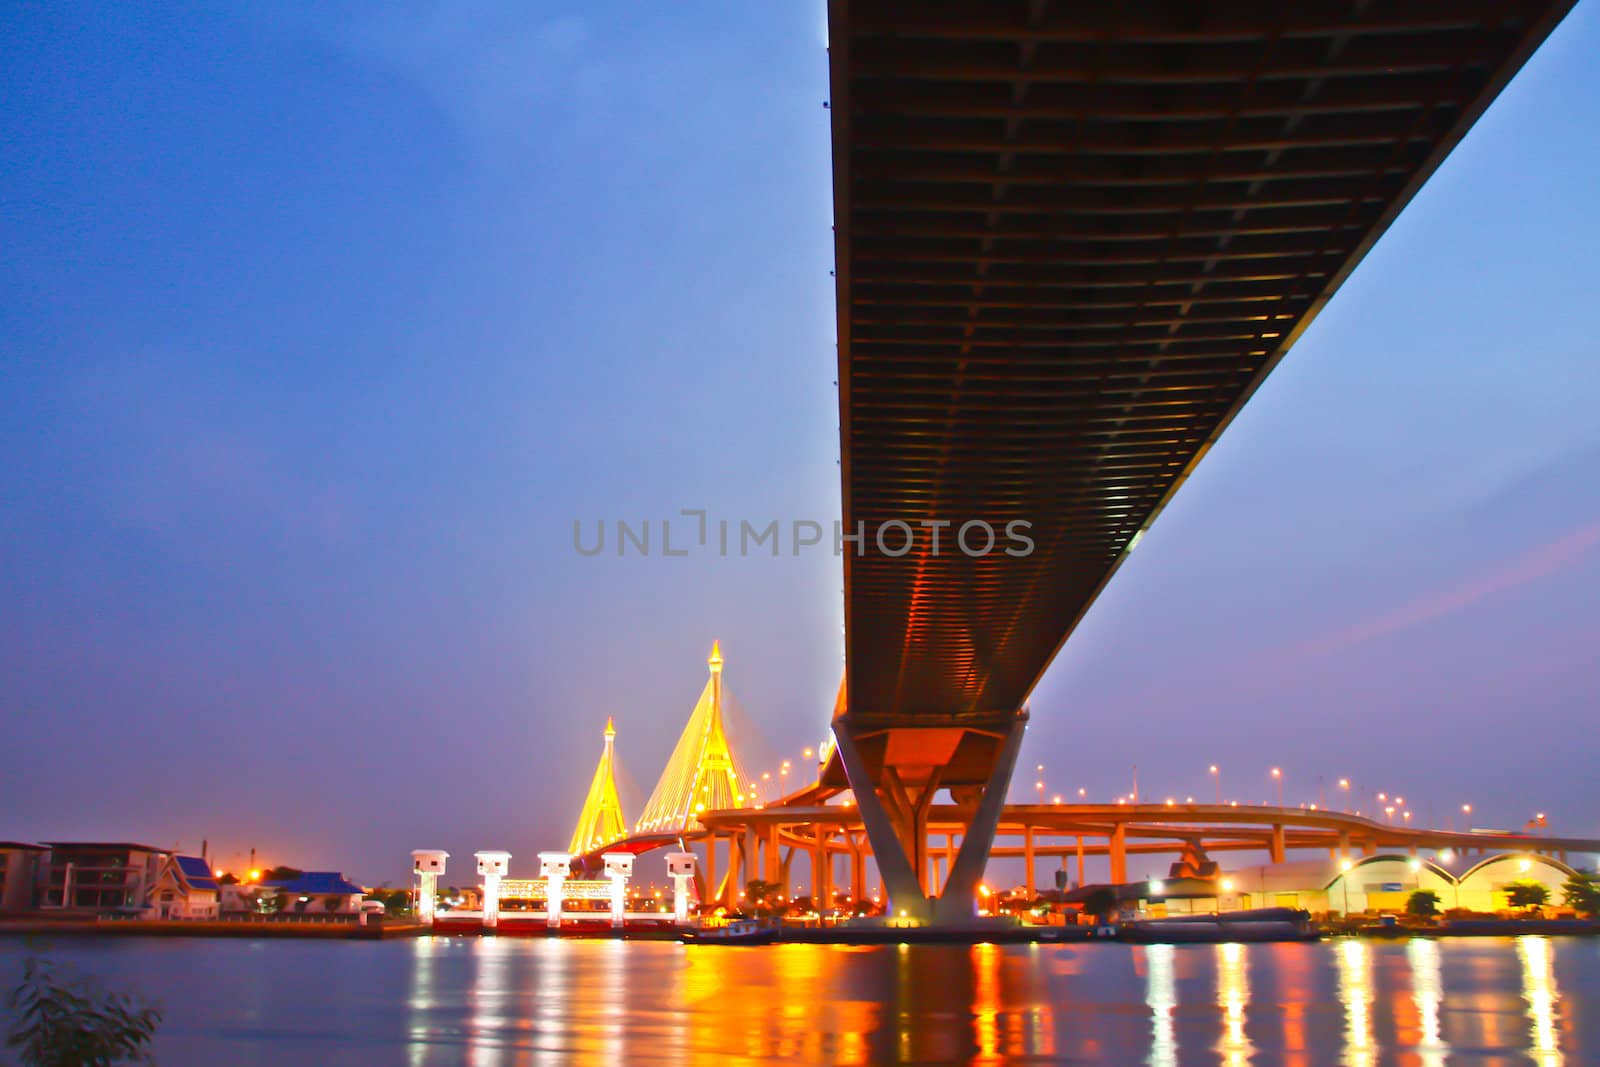 Bridge by Photoguide